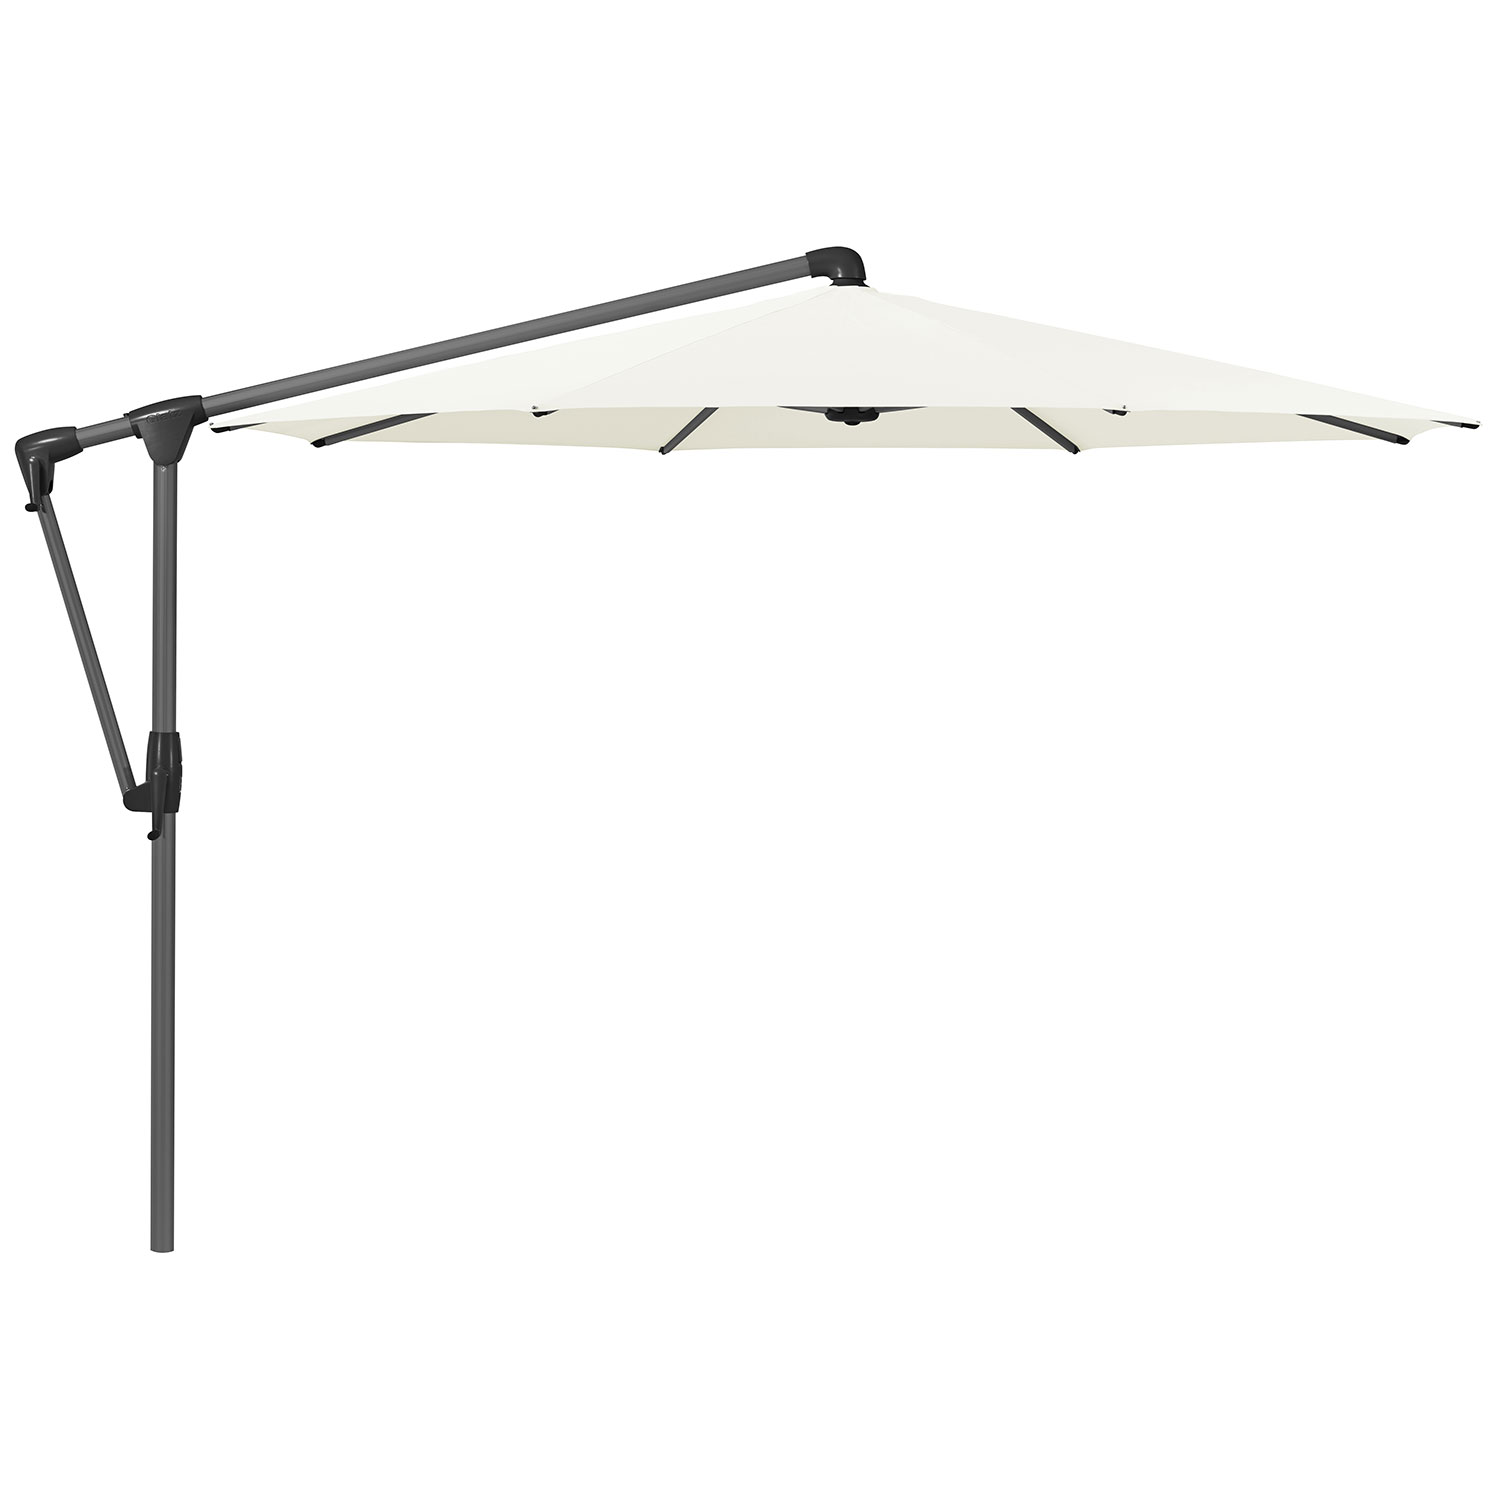 Sunwing Casa frihängande parasoll 330 cm kat.5 antracite alu / 510 white